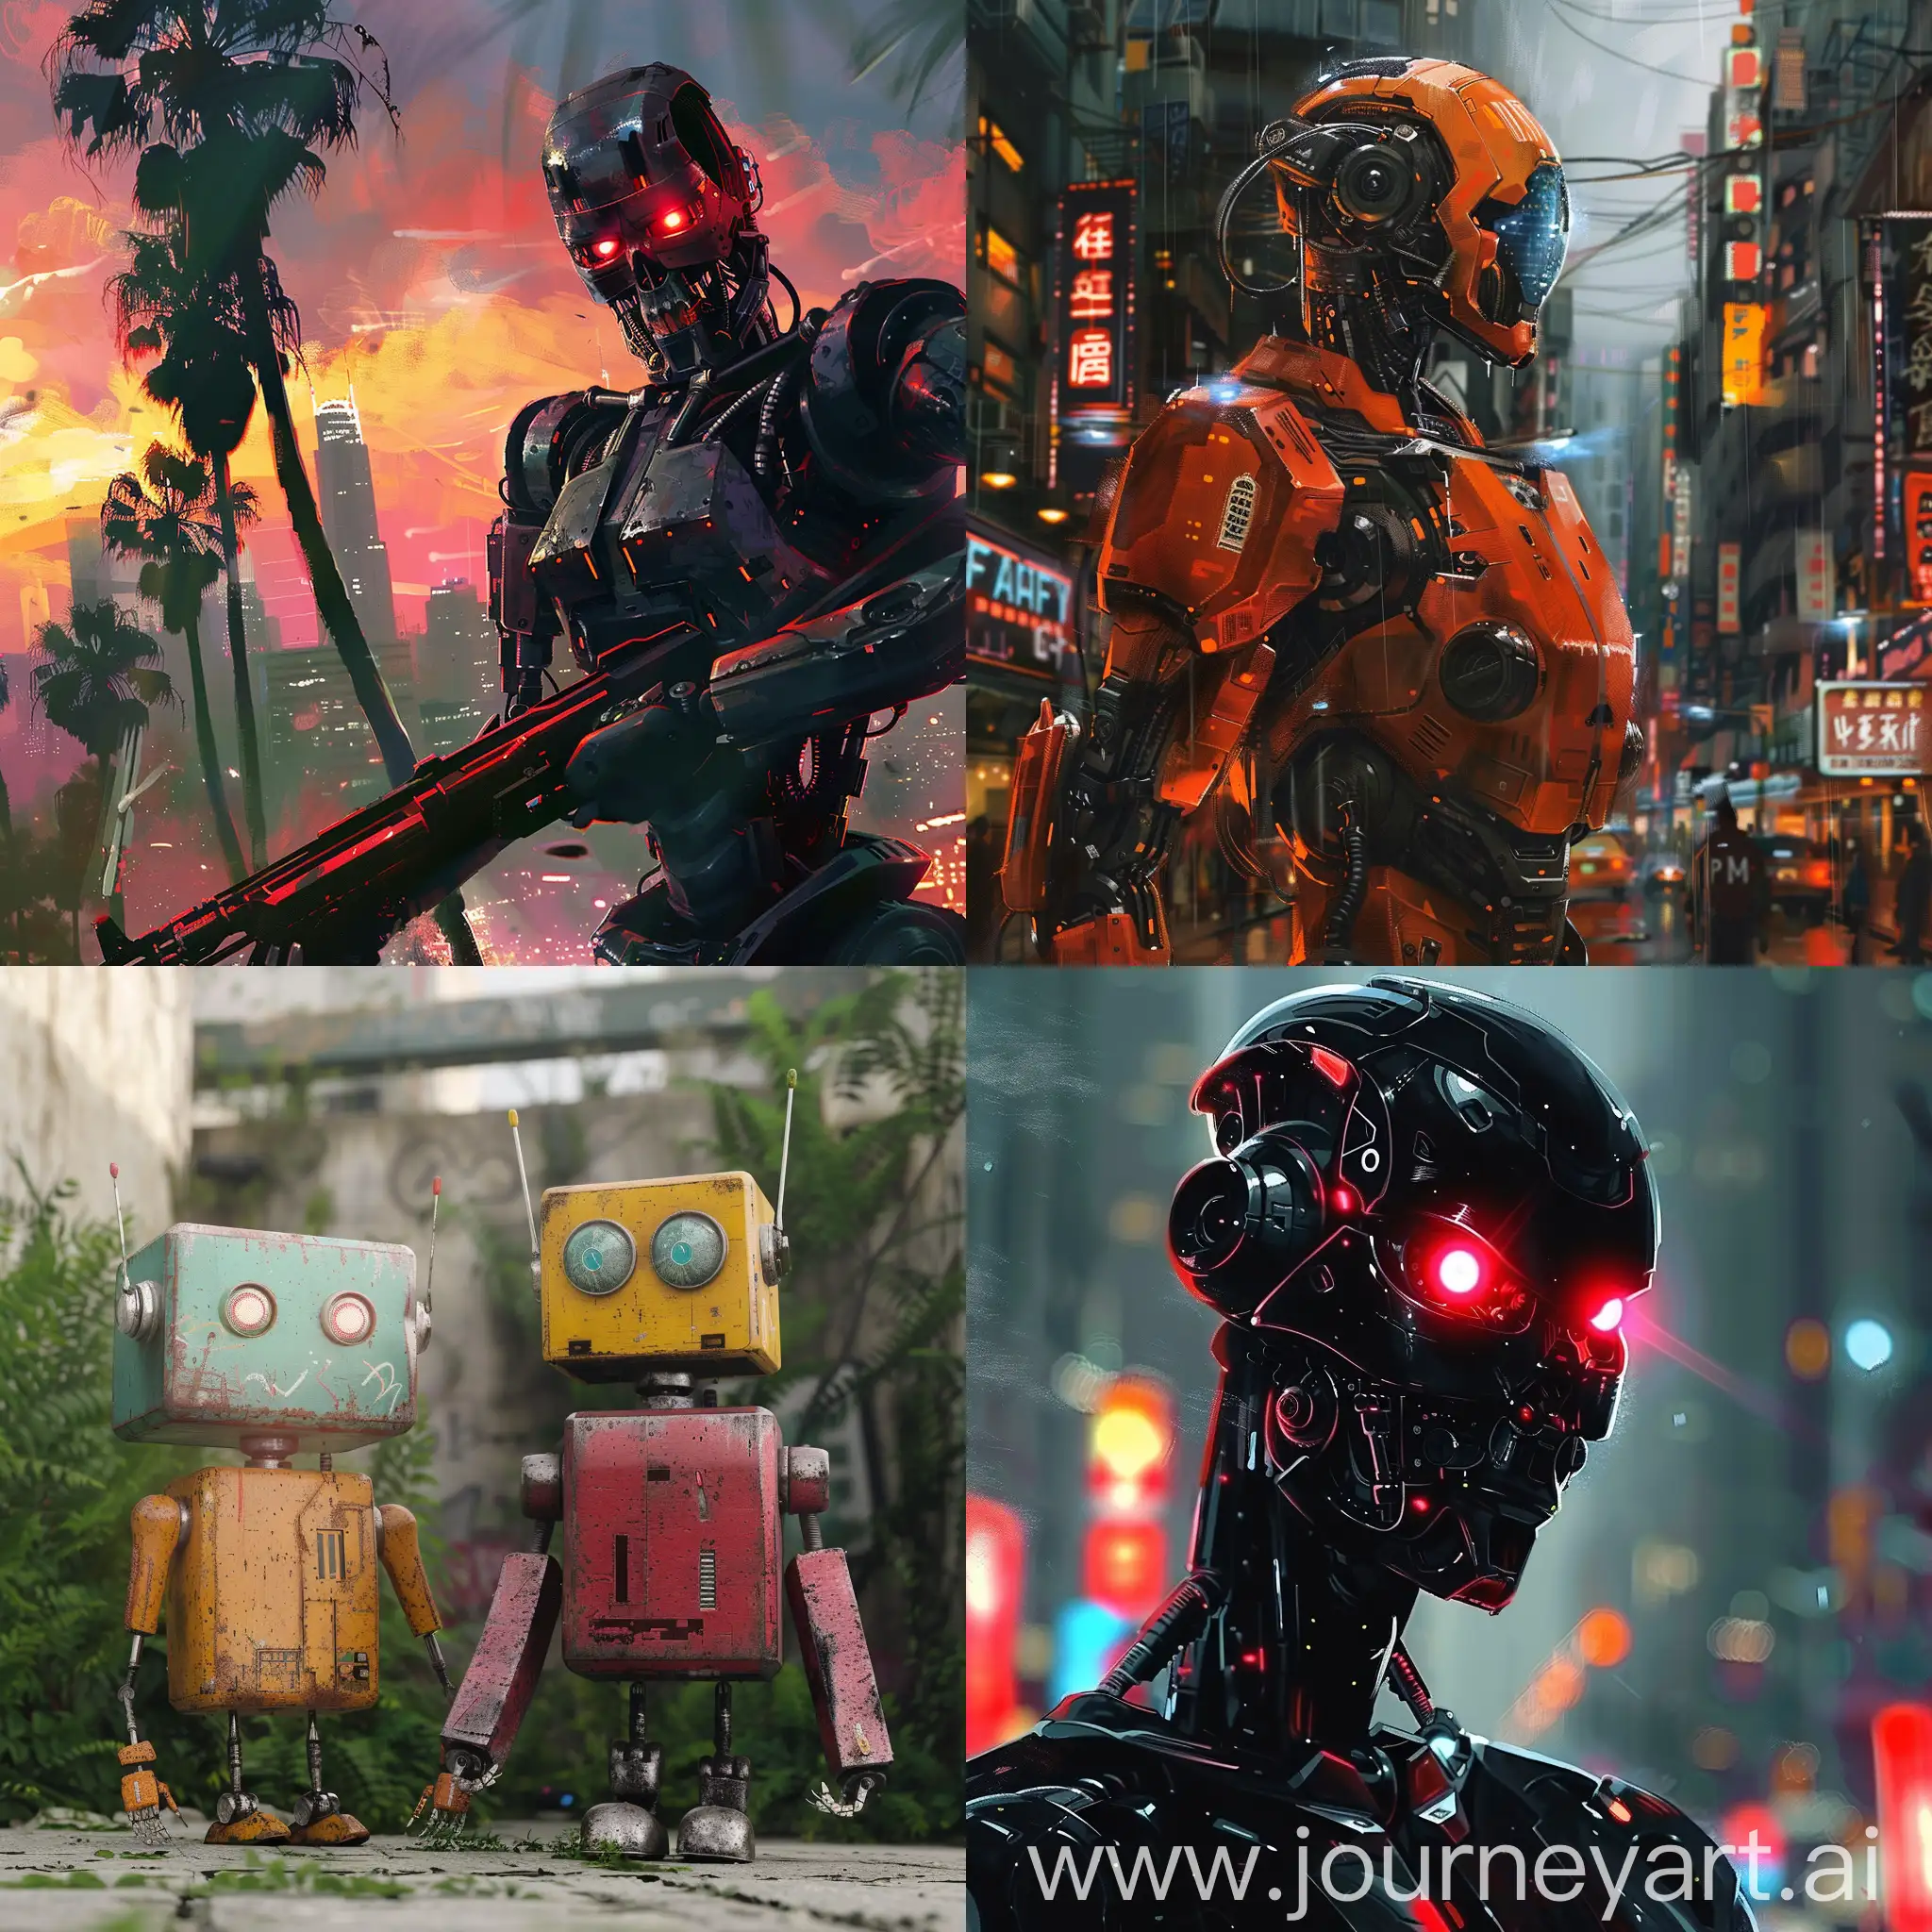 Futuristic-Robots-Roaming-in-GTAInspired-Urban-Art